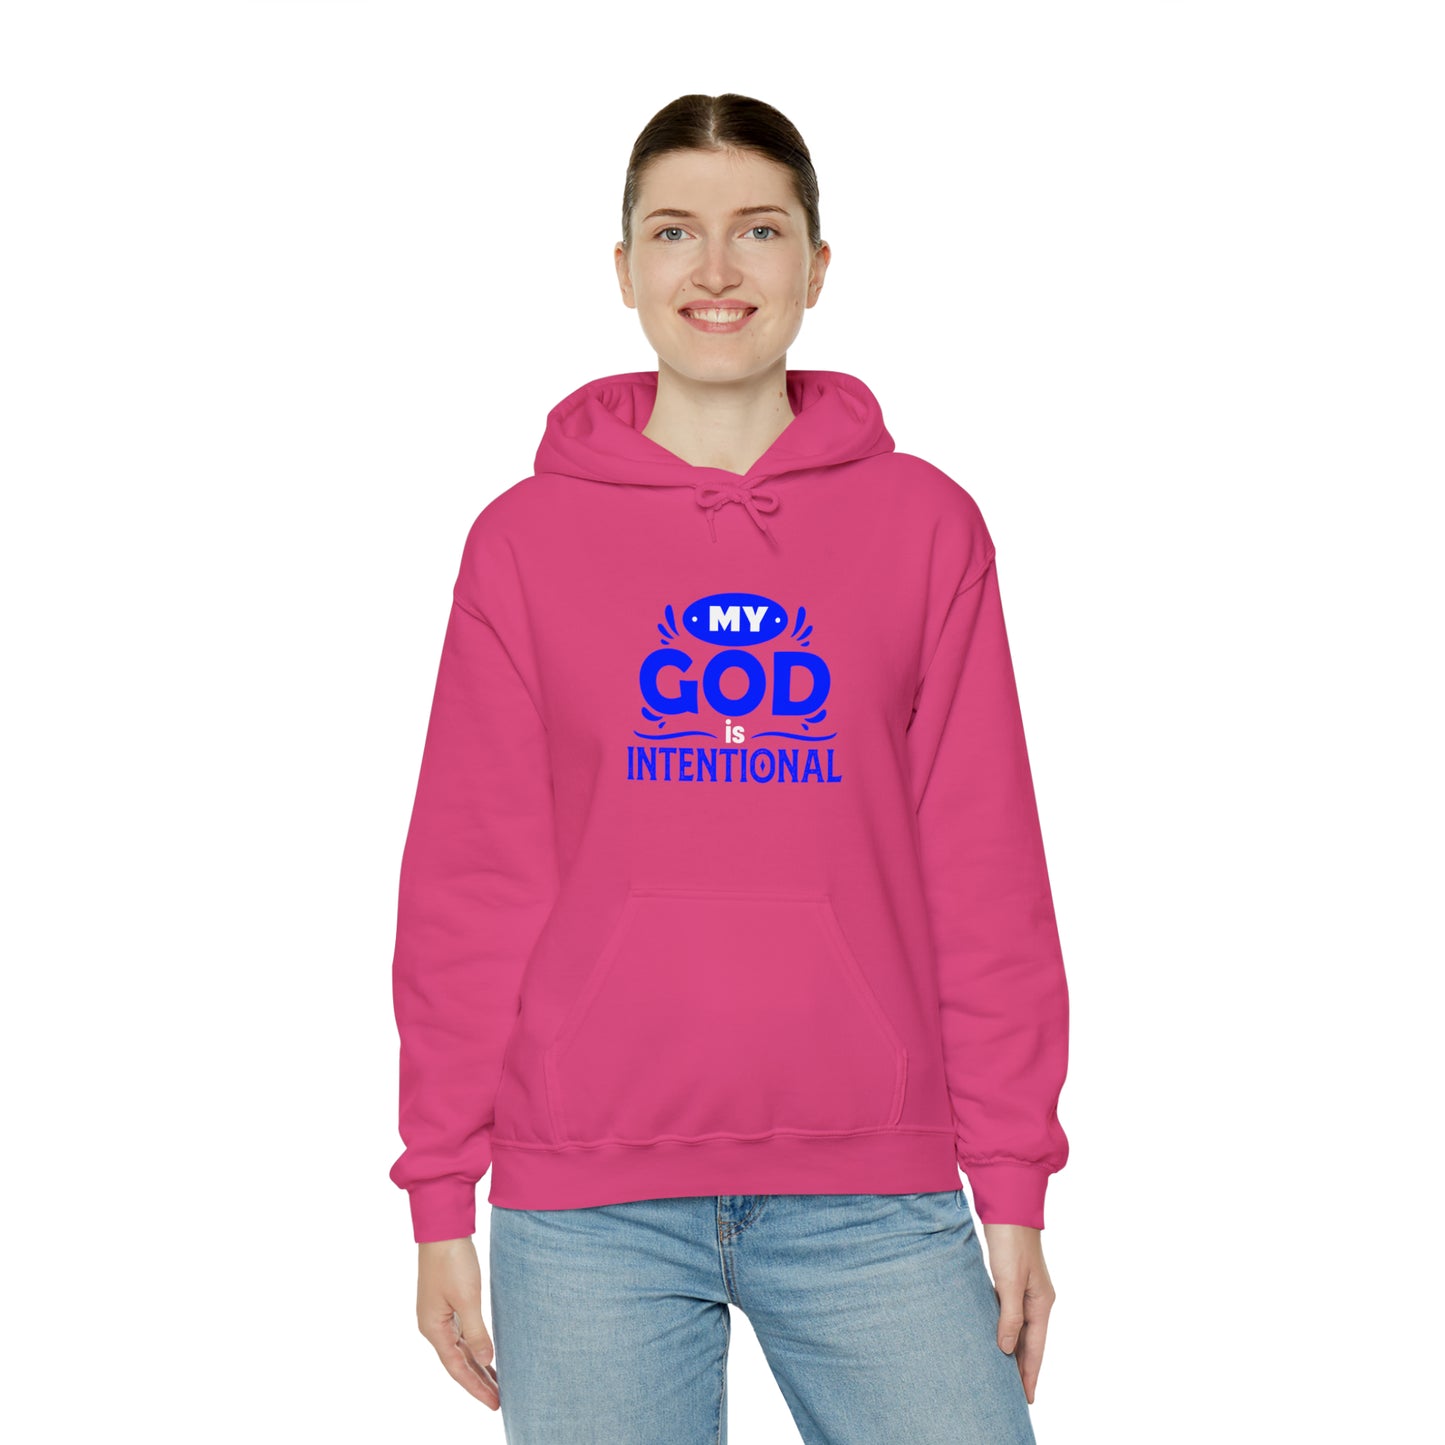 My God Is Intentional  Unisex Hooded Sweatshirt